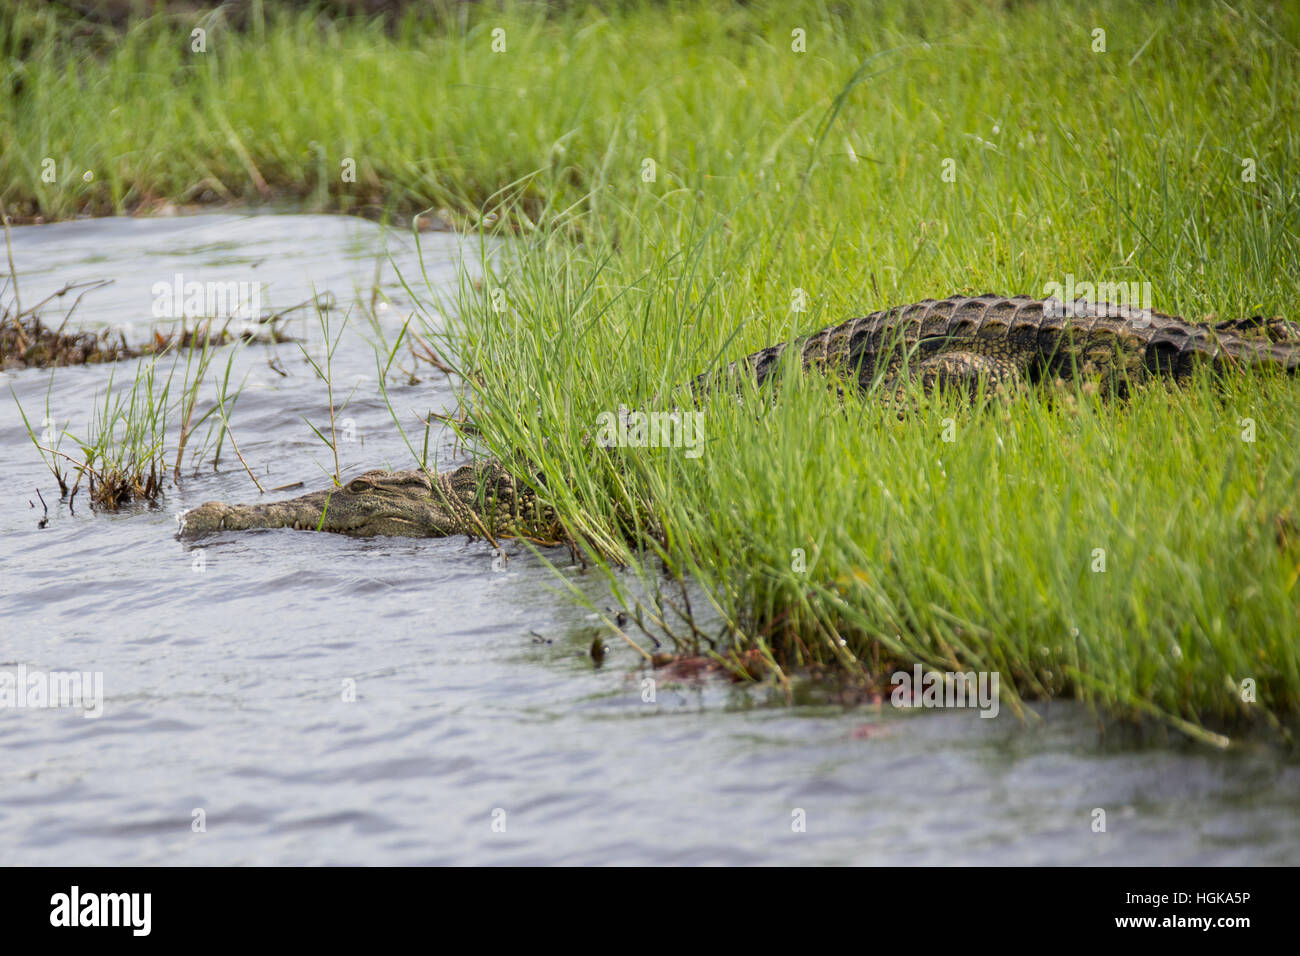 Crocodile entering the river, Chobe National Park, Botswana, Africa Stock Photo